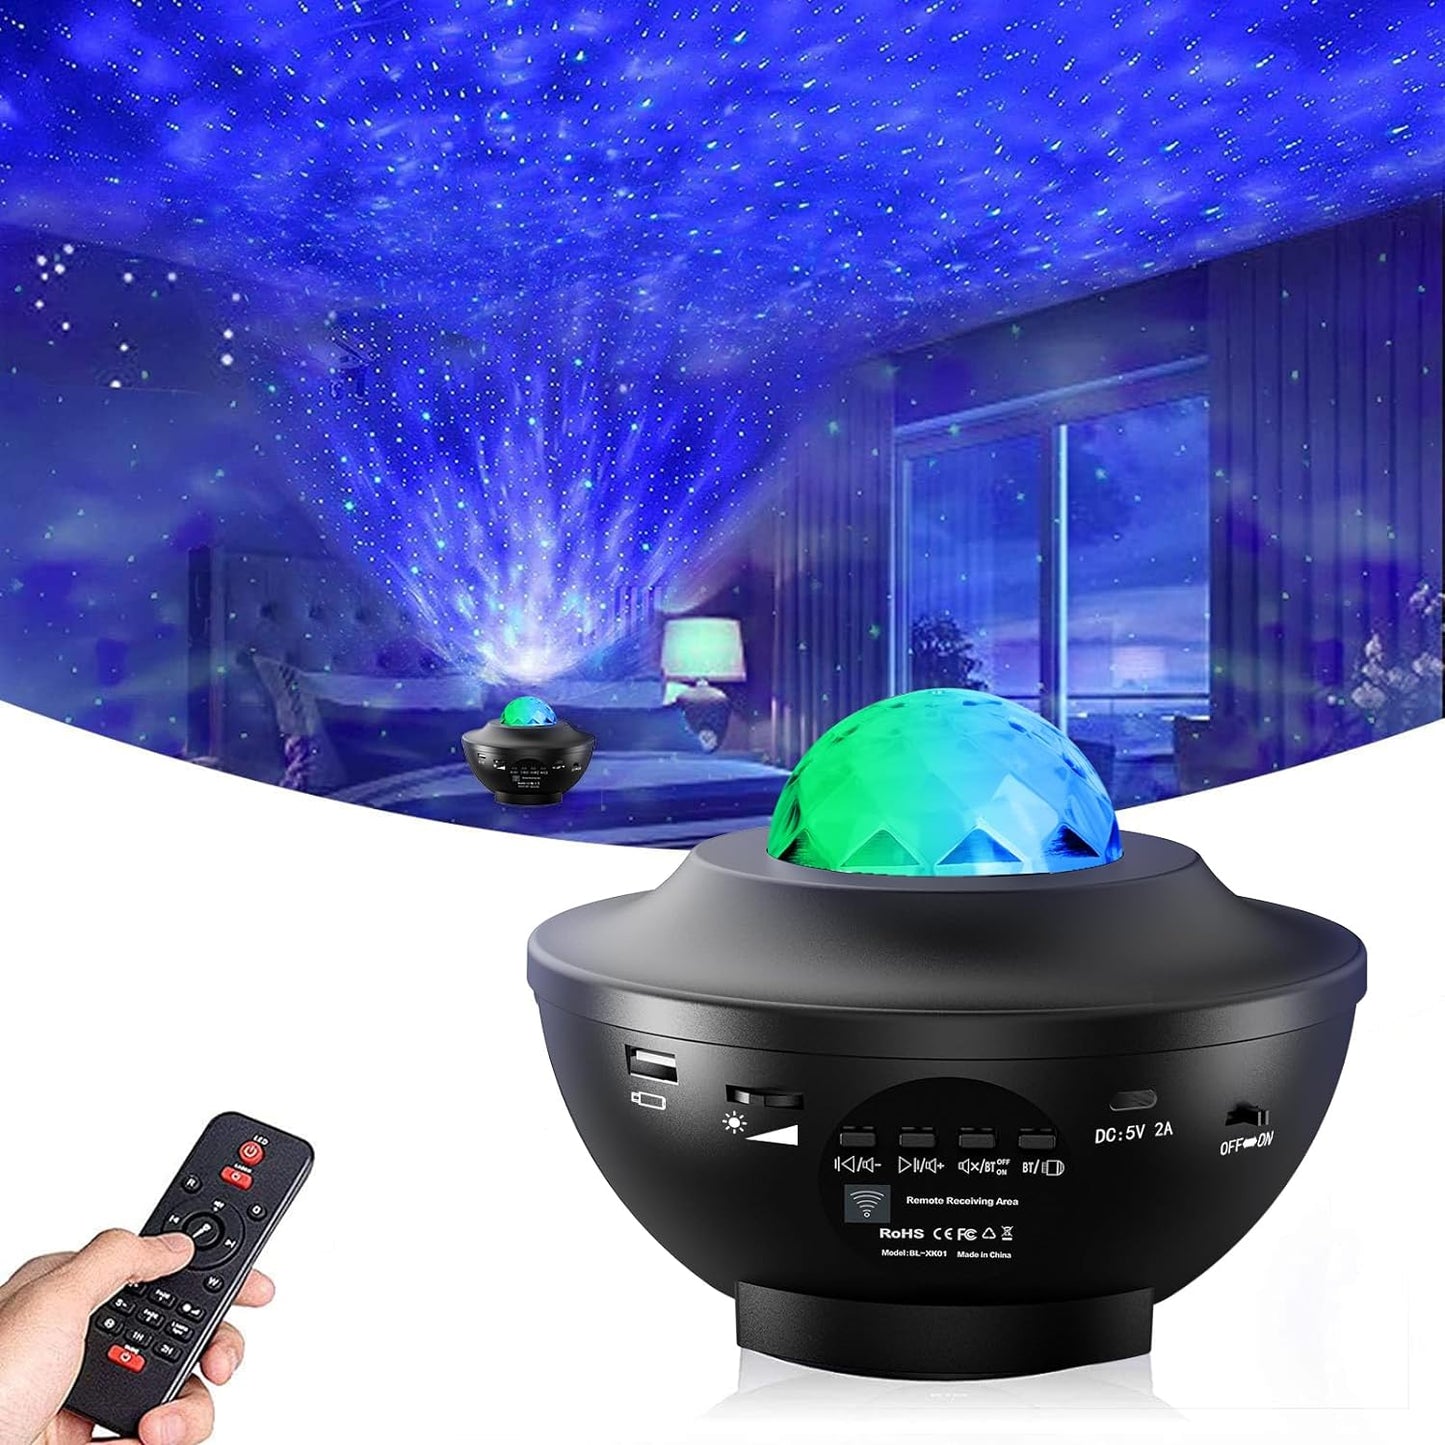 StellarPod Galaxy Sky Star Light Projector with Bluetooth Music & Remote